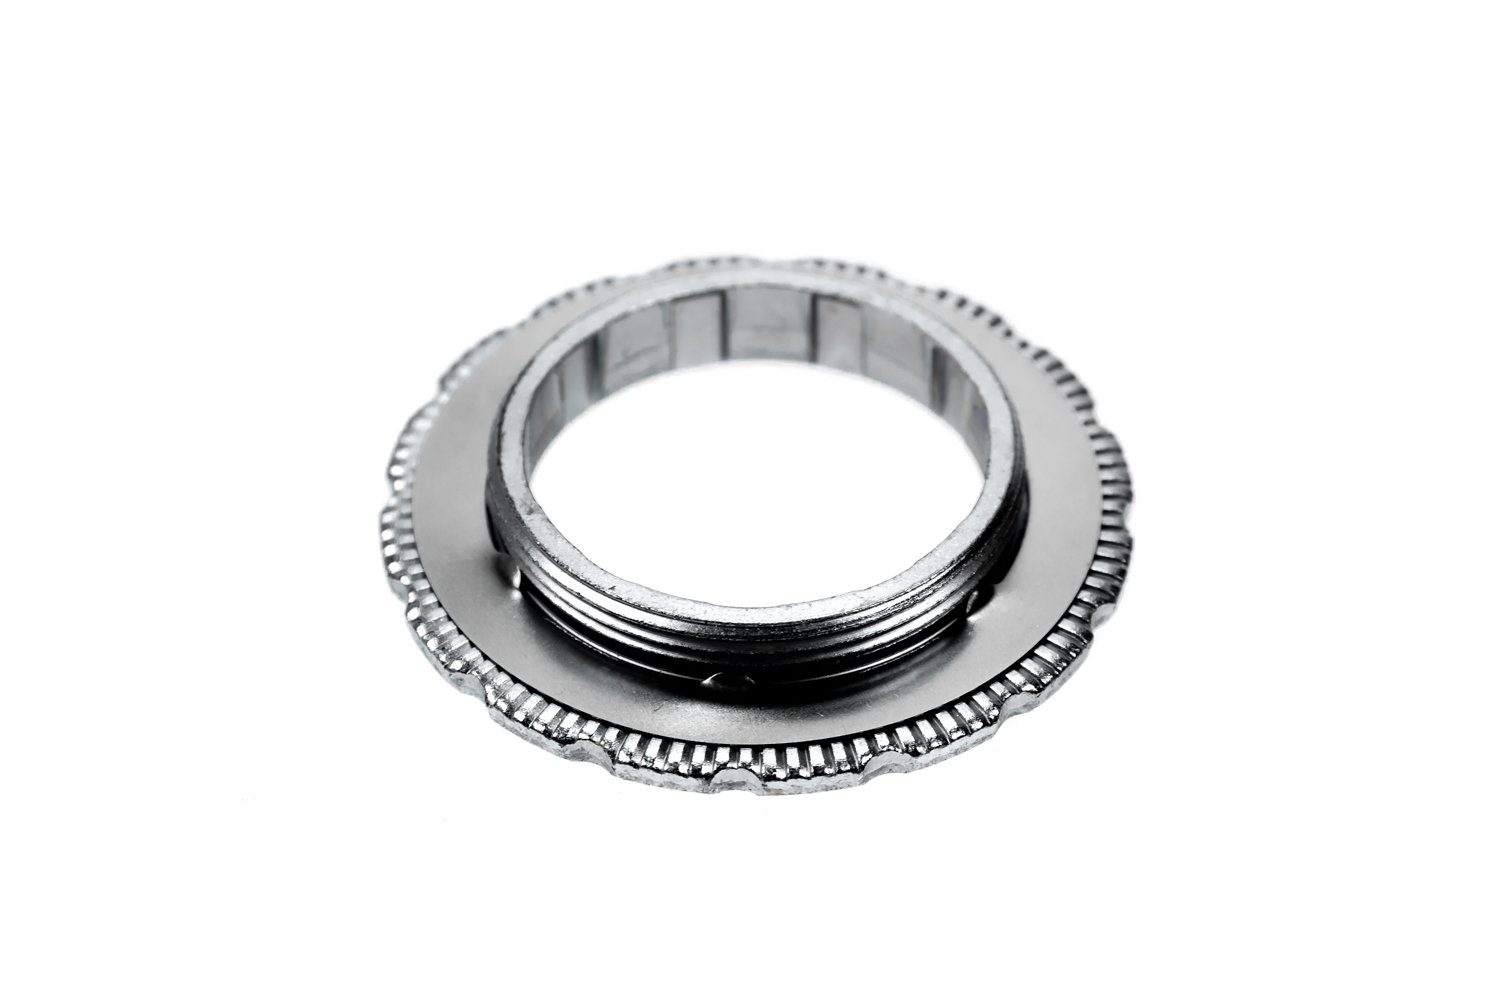 Lock Rotor Shimano Verschlussring 15mm Felgenbremse Centerlock 26,5mm Shimano Ring Achsen